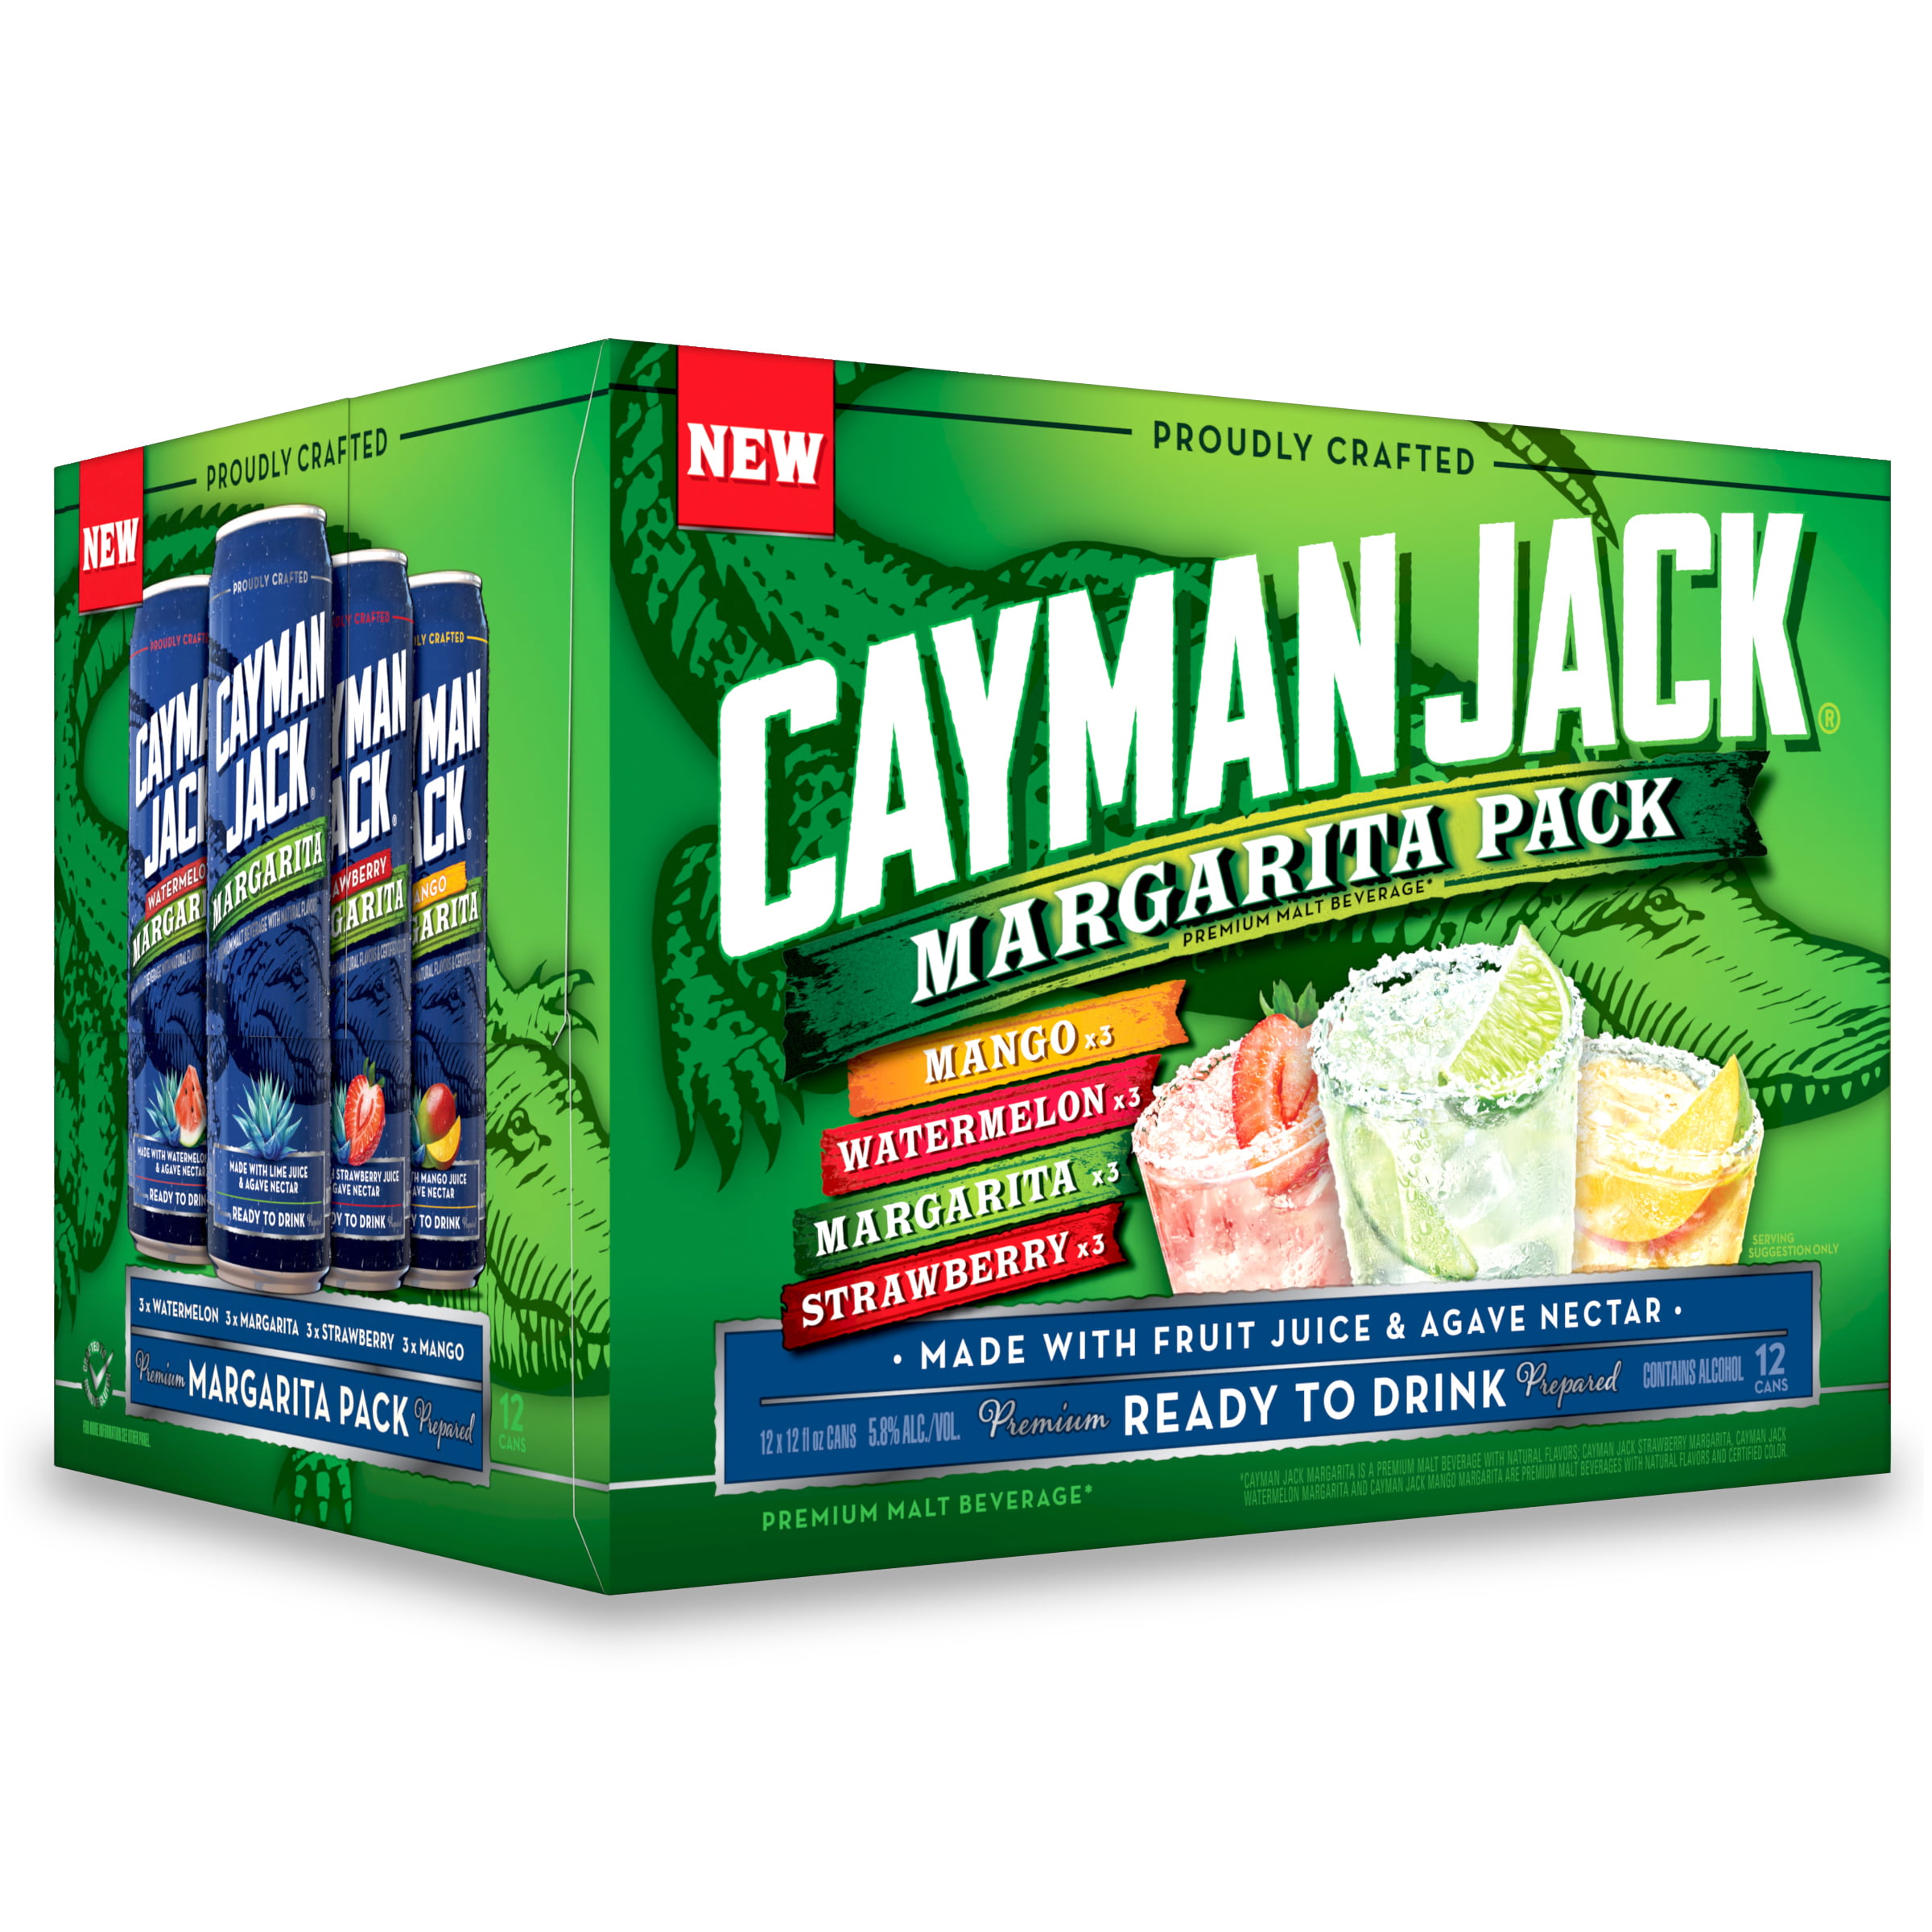 cayman-jack-margarita-variety-pack-12-pack-12-fl-oz-cans-walmart